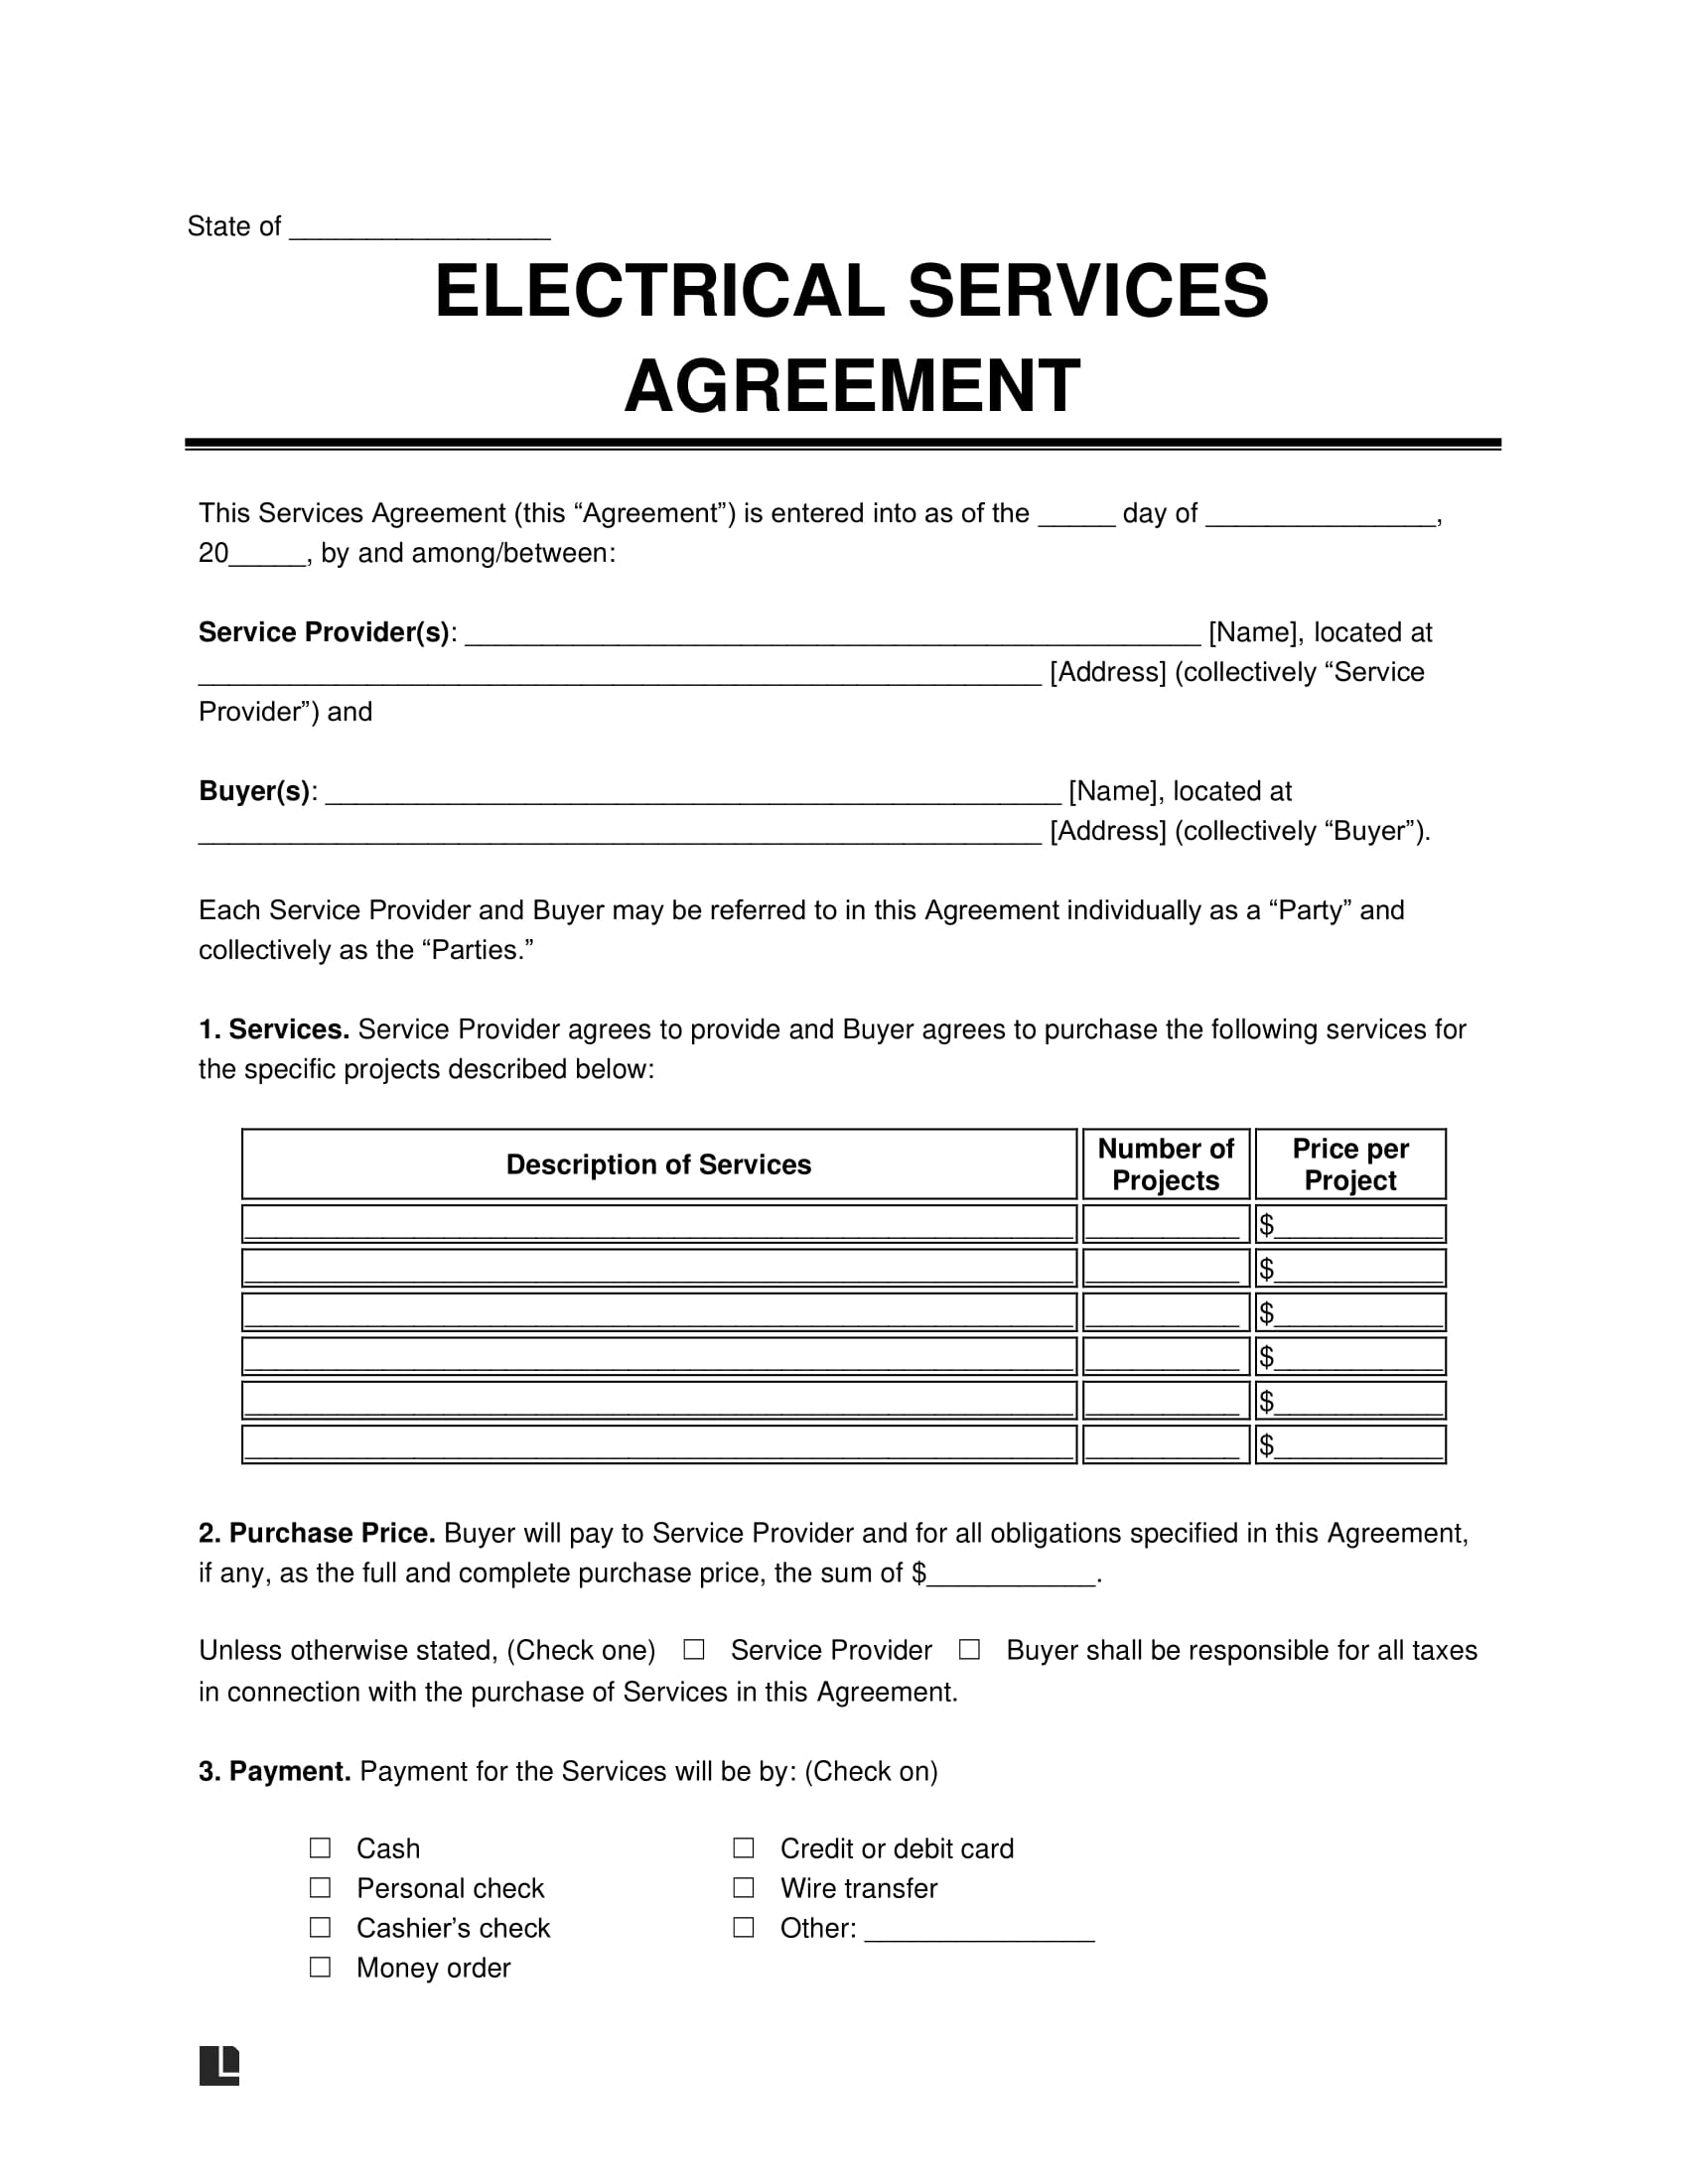 Electrical contract screenshot